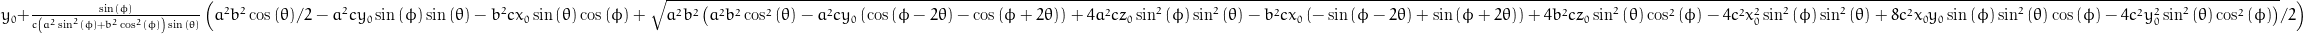 y_{0} + \frac{\sin{\left (\phi \right )}}{c \left(a^{2} \sin^{2}{\left (\phi \right )} + b^{2} \cos^{2}{\left (\phi \right )}\right) \sin{\left (\theta \right )}} \left(\frac{a^{2} b^{2}}{2} \cos{\left (\theta \right )} - a^{2} c y_{0} \sin{\left (\phi \right )} \sin{\left (\theta \right )} - b^{2} c x_{0} \sin{\left (\theta \right )} \cos{\left (\phi \right )} + \frac{1}{2} \sqrt{a^{2} b^{2} \left(a^{2} b^{2} \cos^{2}{\left (\theta \right )} - a^{2} c y_{0} \left(\cos{\left (\phi - 2 \theta \right )} - \cos{\left (\phi + 2 \theta \right )}\right) + 4 a^{2} c z_{0} \sin^{2}{\left (\phi \right )} \sin^{2}{\left (\theta \right )} - b^{2} c x_{0} \left(- \sin{\left (\phi - 2 \theta \right )} + \sin{\left (\phi + 2 \theta \right )}\right) + 4 b^{2} c z_{0} \sin^{2}{\left (\theta \right )} \cos^{2}{\left (\phi \right )} - 4 c^{2} x_{0}^{2} \sin^{2}{\left (\phi \right )} \sin^{2}{\left (\theta \right )} + 8 c^{2} x_{0} y_{0} \sin{\left (\phi \right )} \sin^{2}{\left (\theta \right )} \cos{\left (\phi \right )} - 4 c^{2} y_{0}^{2} \sin^{2}{\left (\theta \right )} \cos^{2}{\left (\phi \right )}\right)}\right)